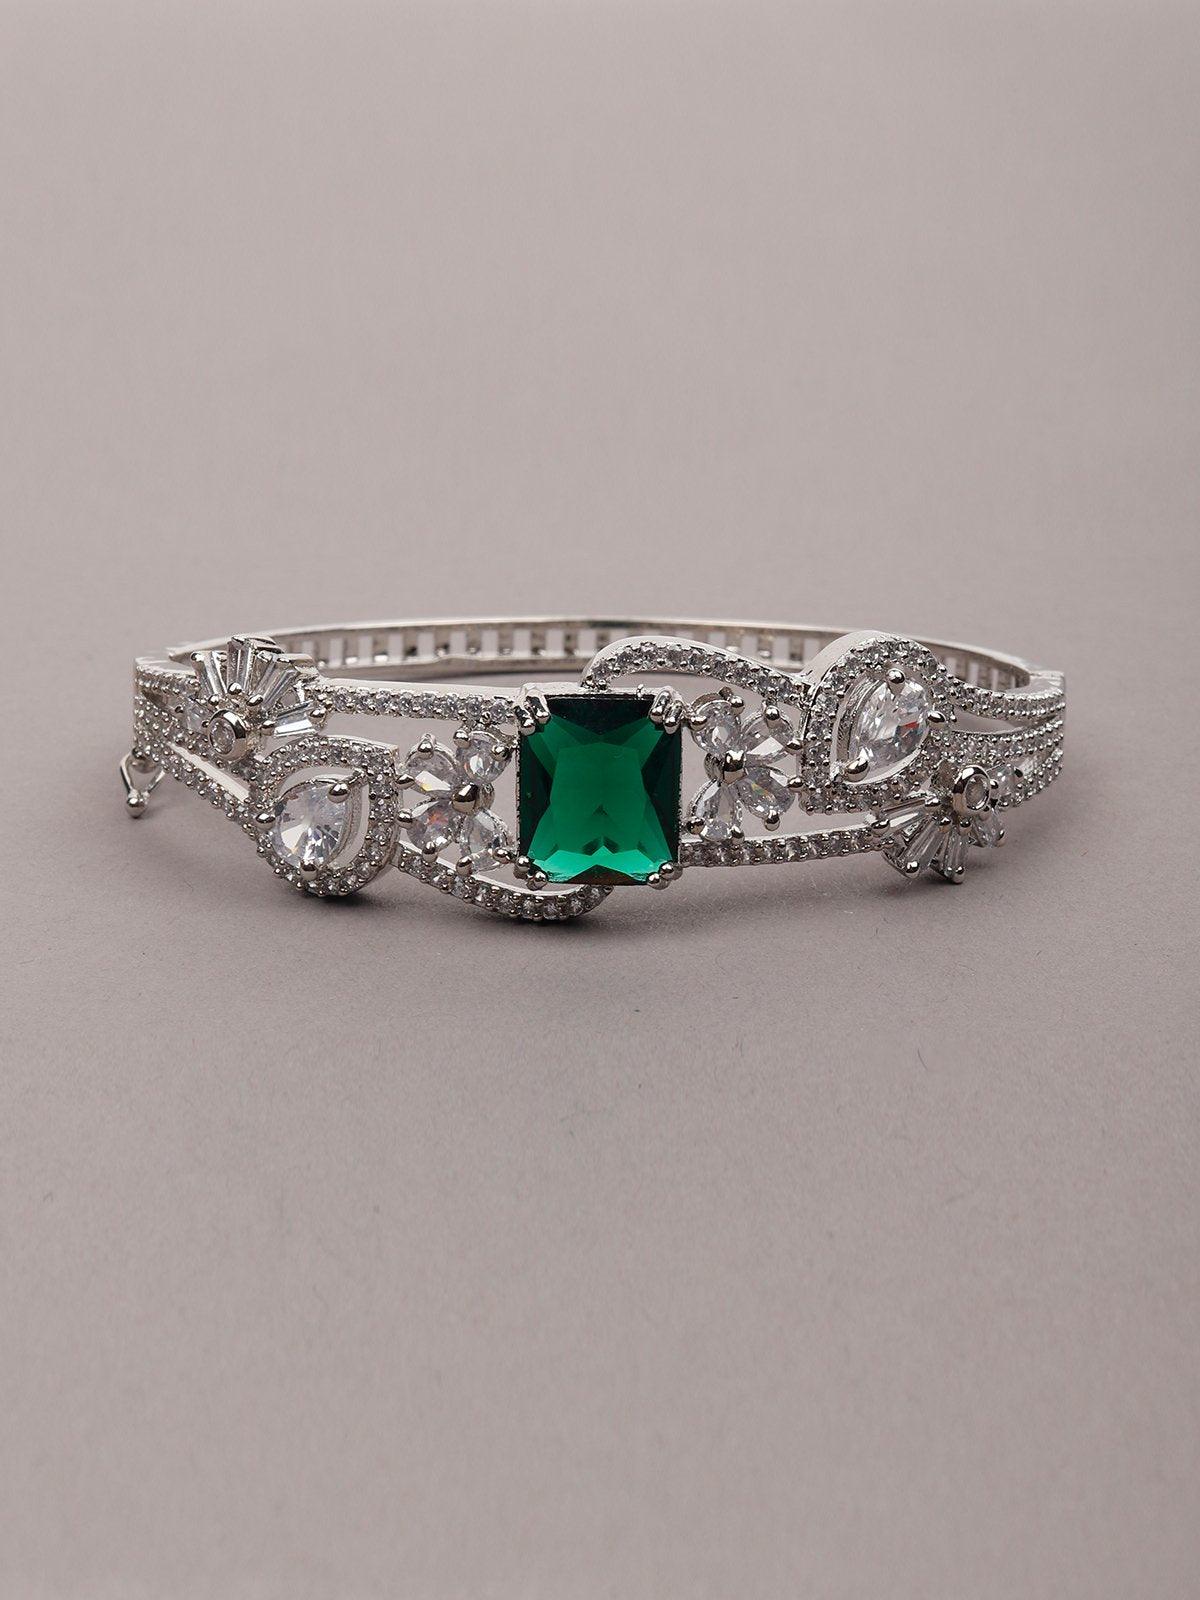 Women's Sparkling Emerald Bracelet - Odette